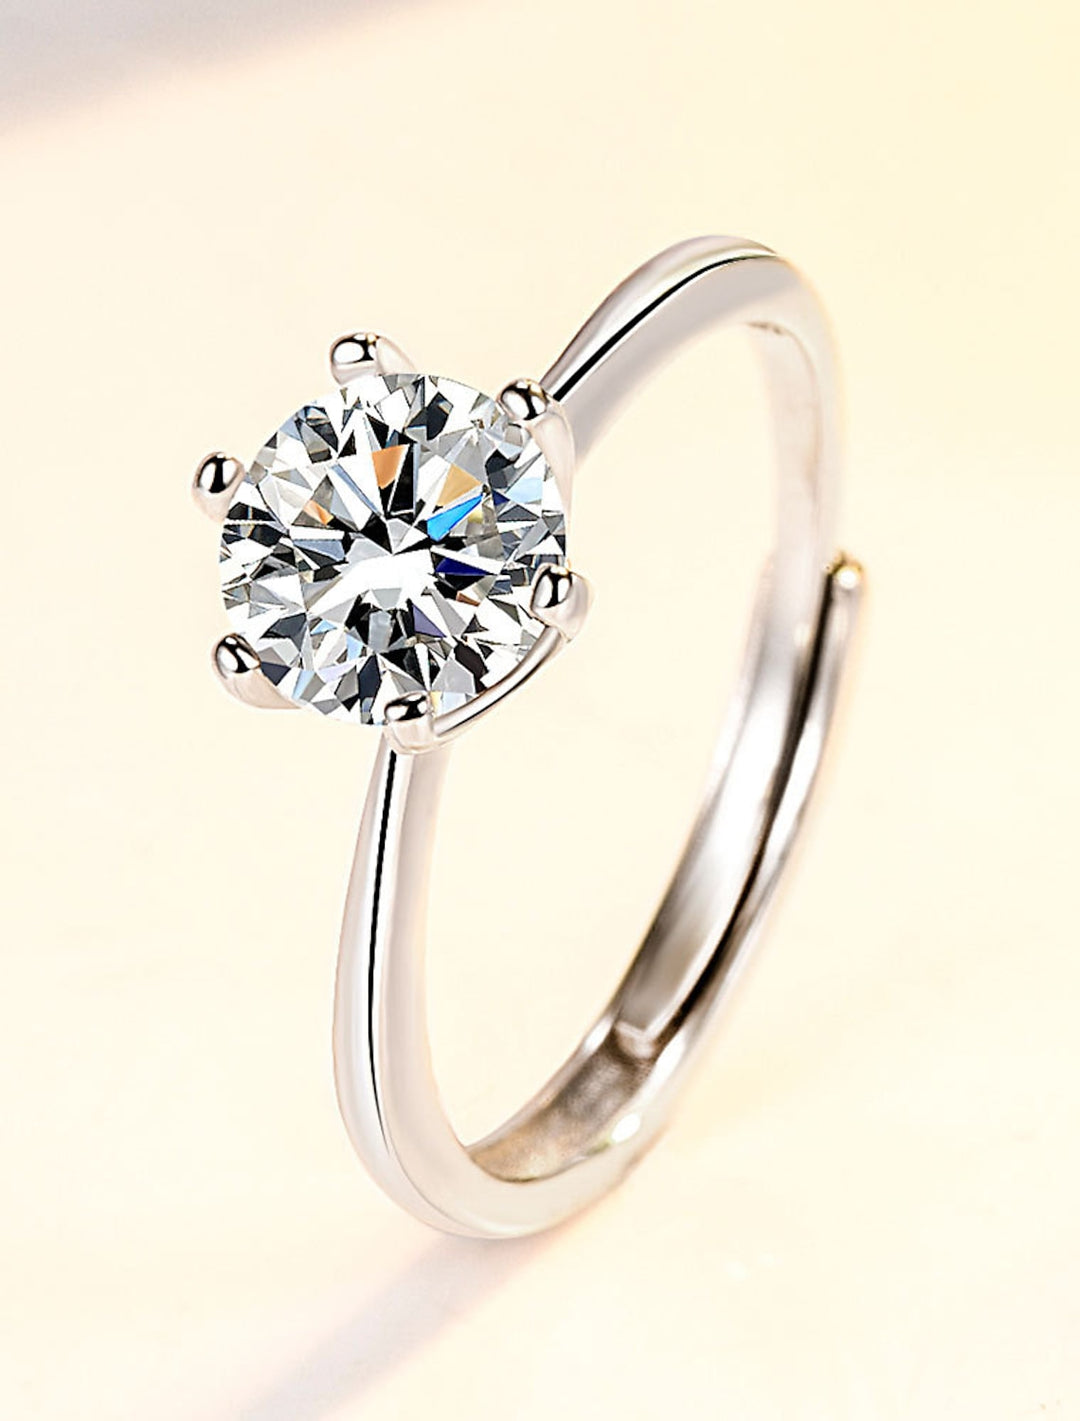 Ring Wedding Geometrical Silver Rhinestone S925 Sterling Silver Stylish Simple Luxury